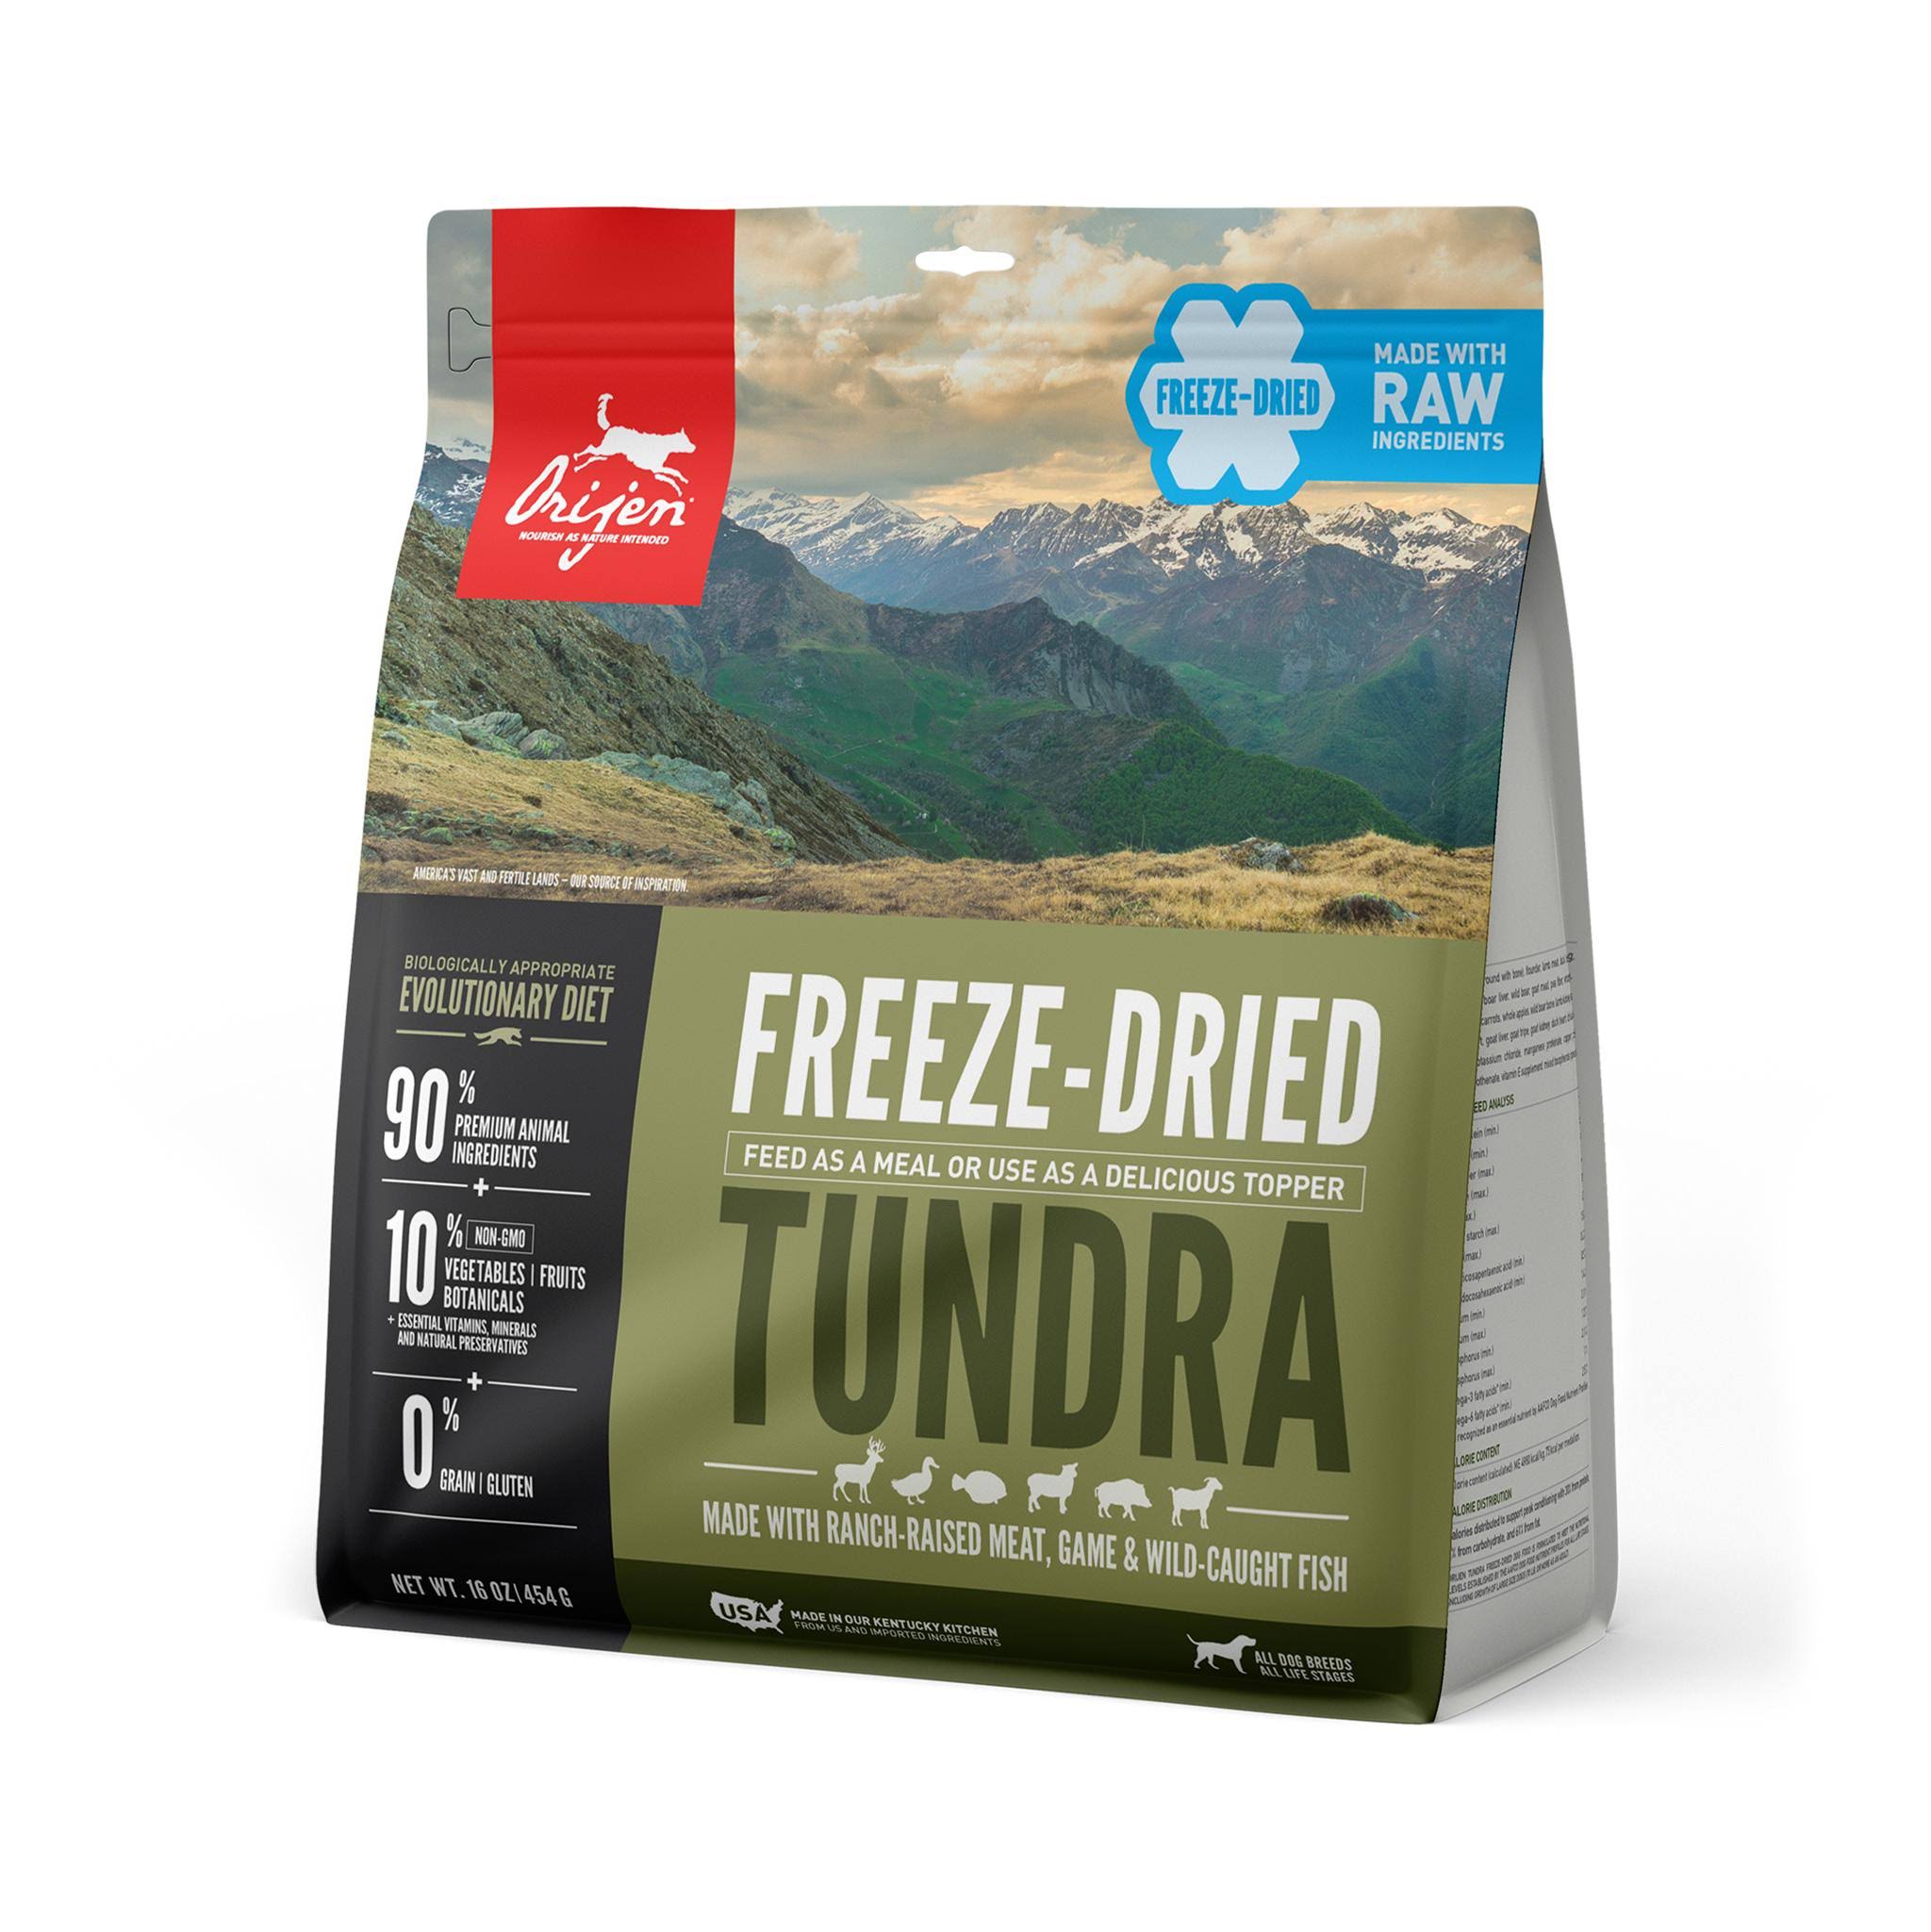 Orijen Freeze Dried Tundra Dog Food, 16 oz